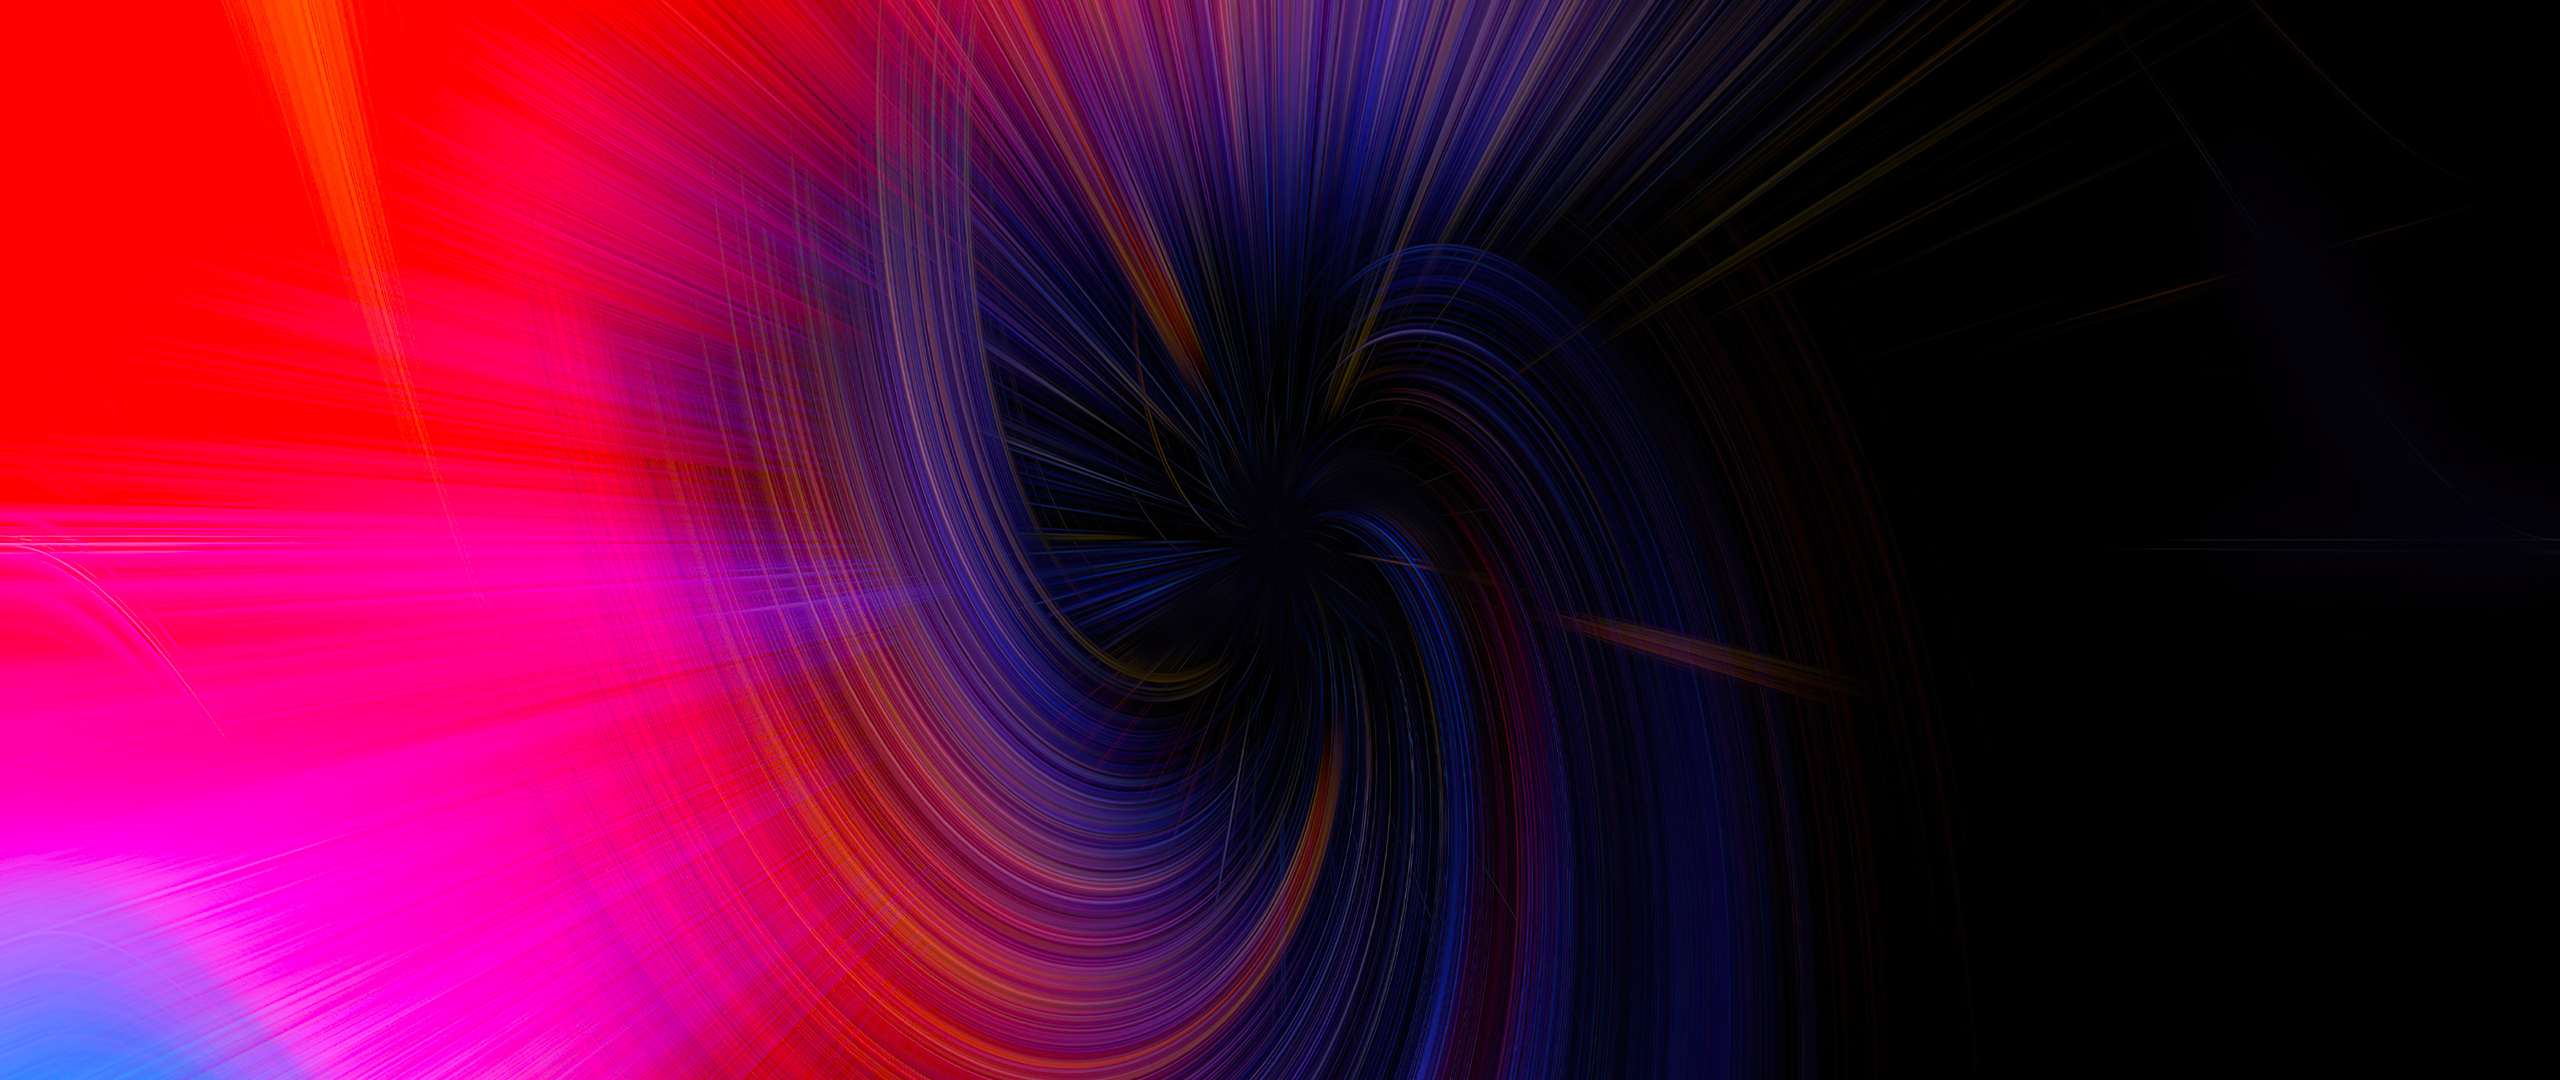 raylight-abstract-4k-kj.jpg